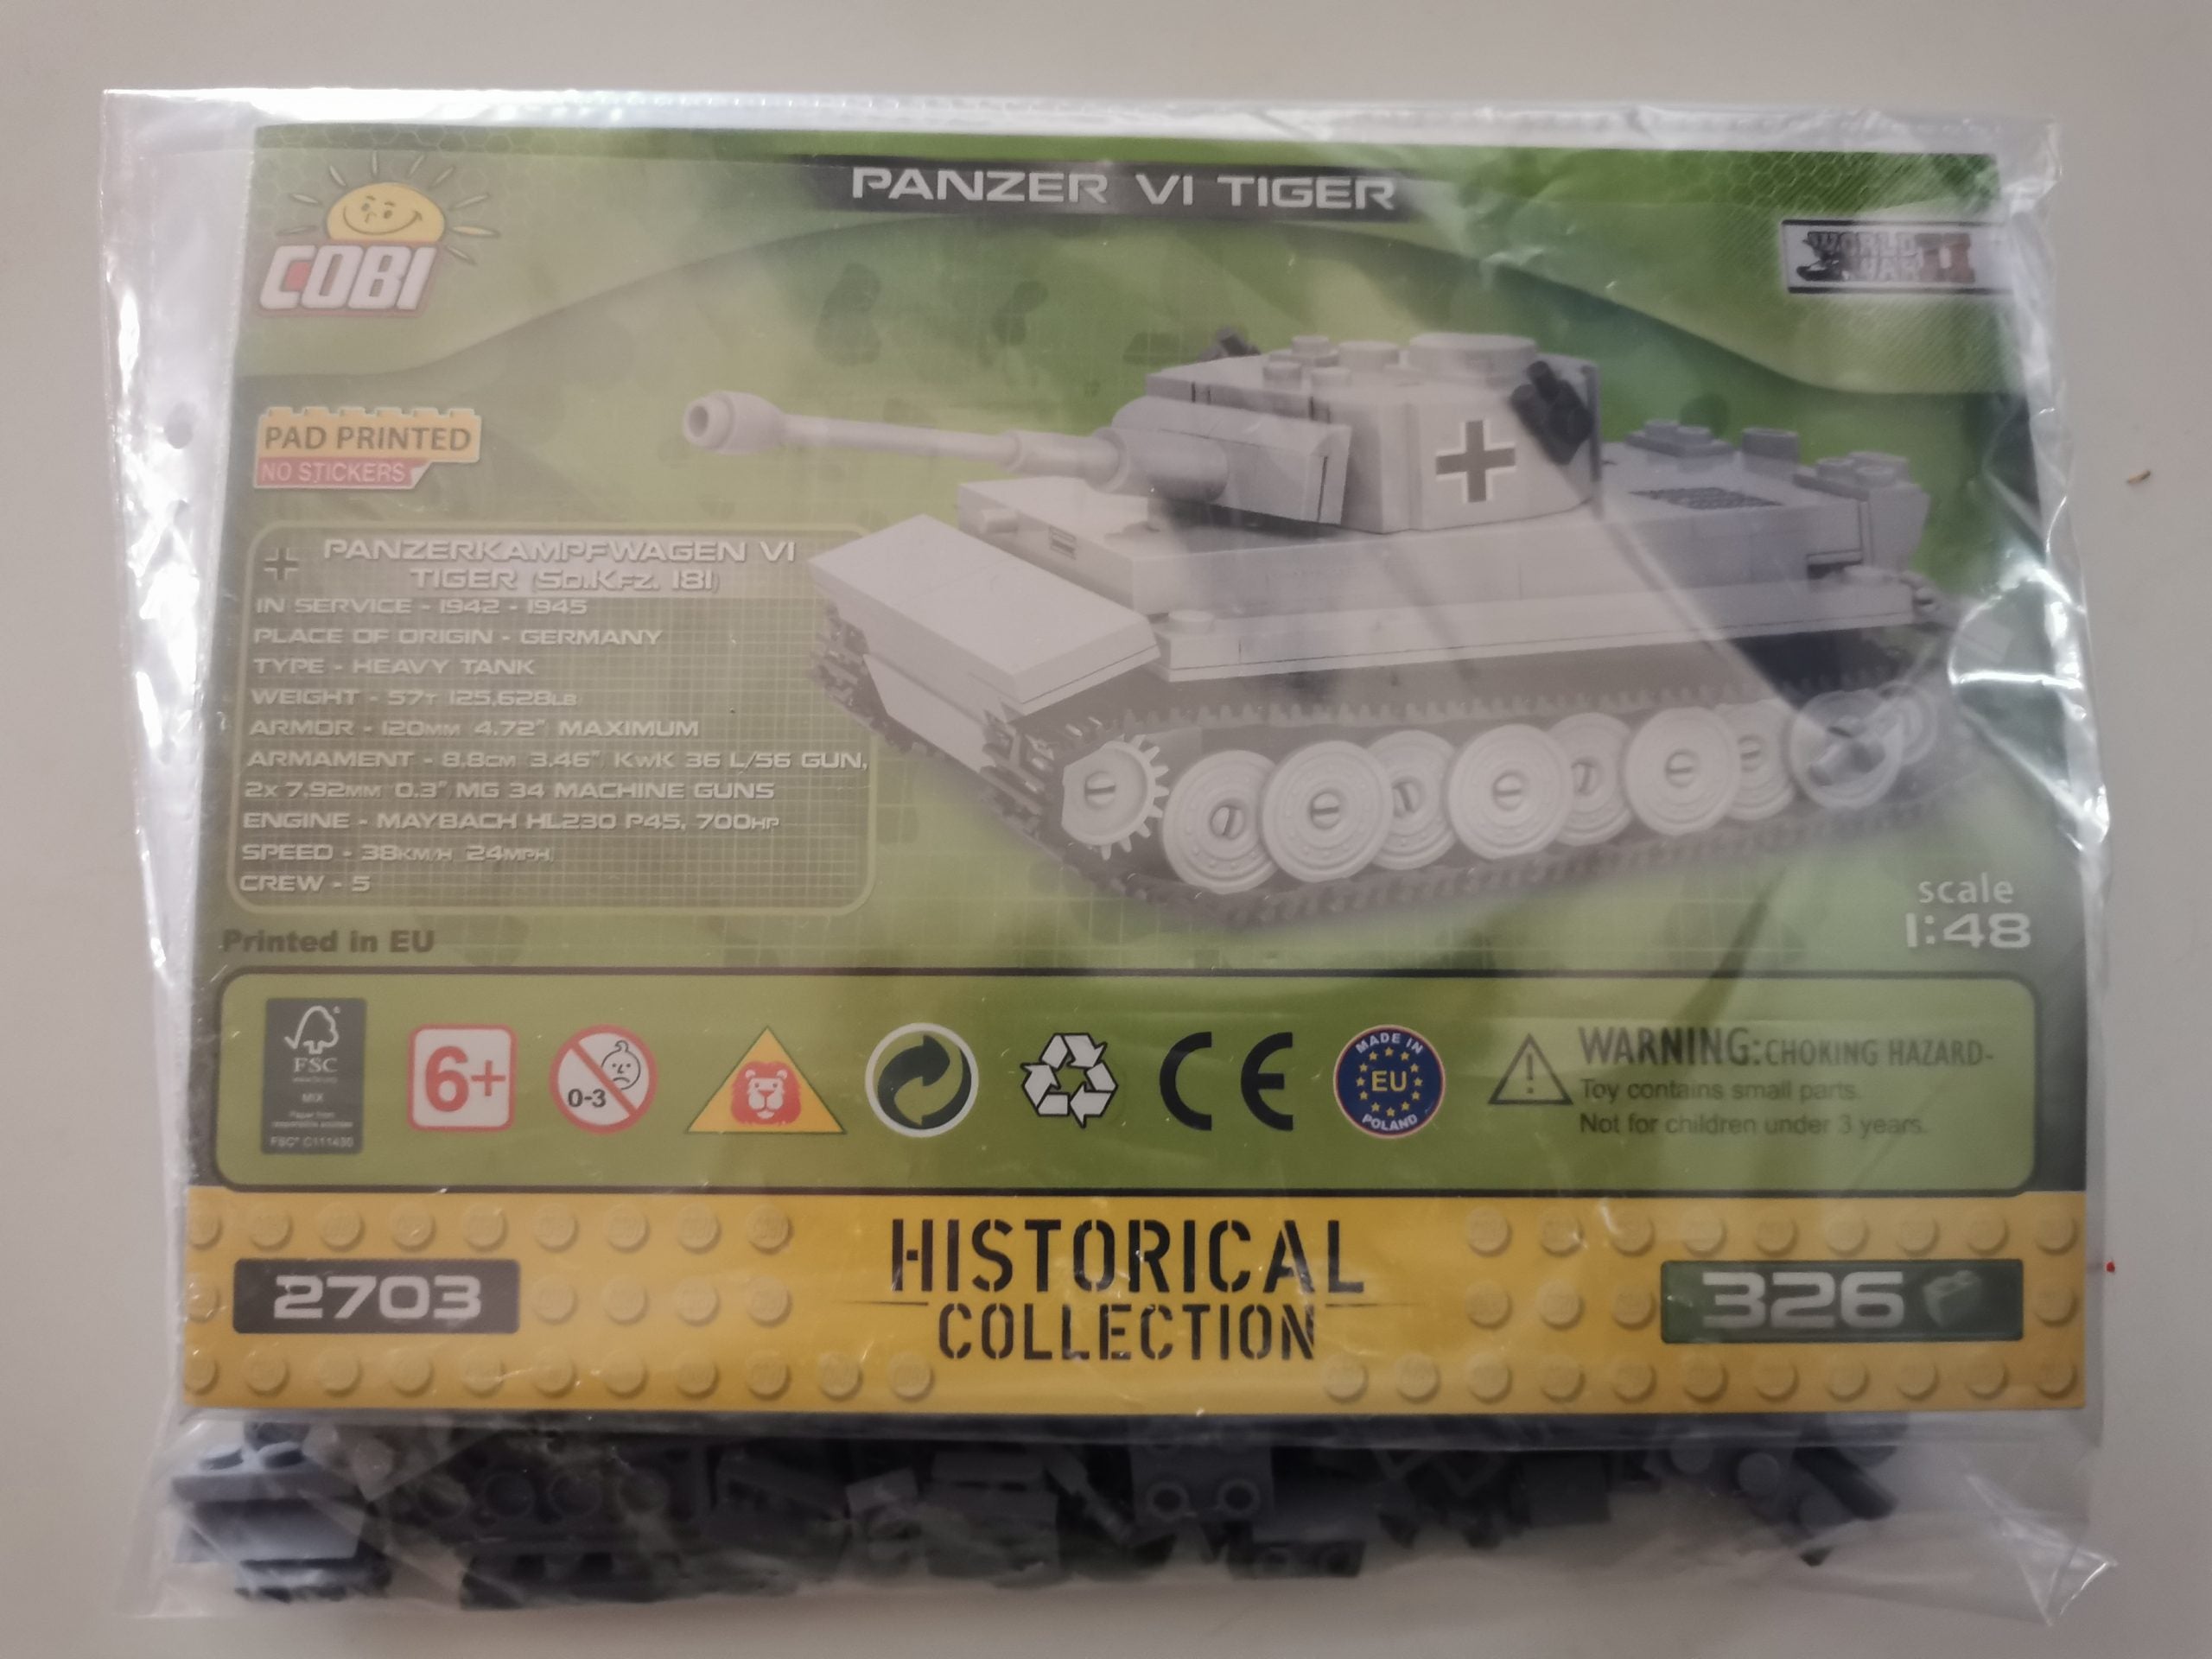 Cobi 2703 Panzer VI Tiger (1:48) used